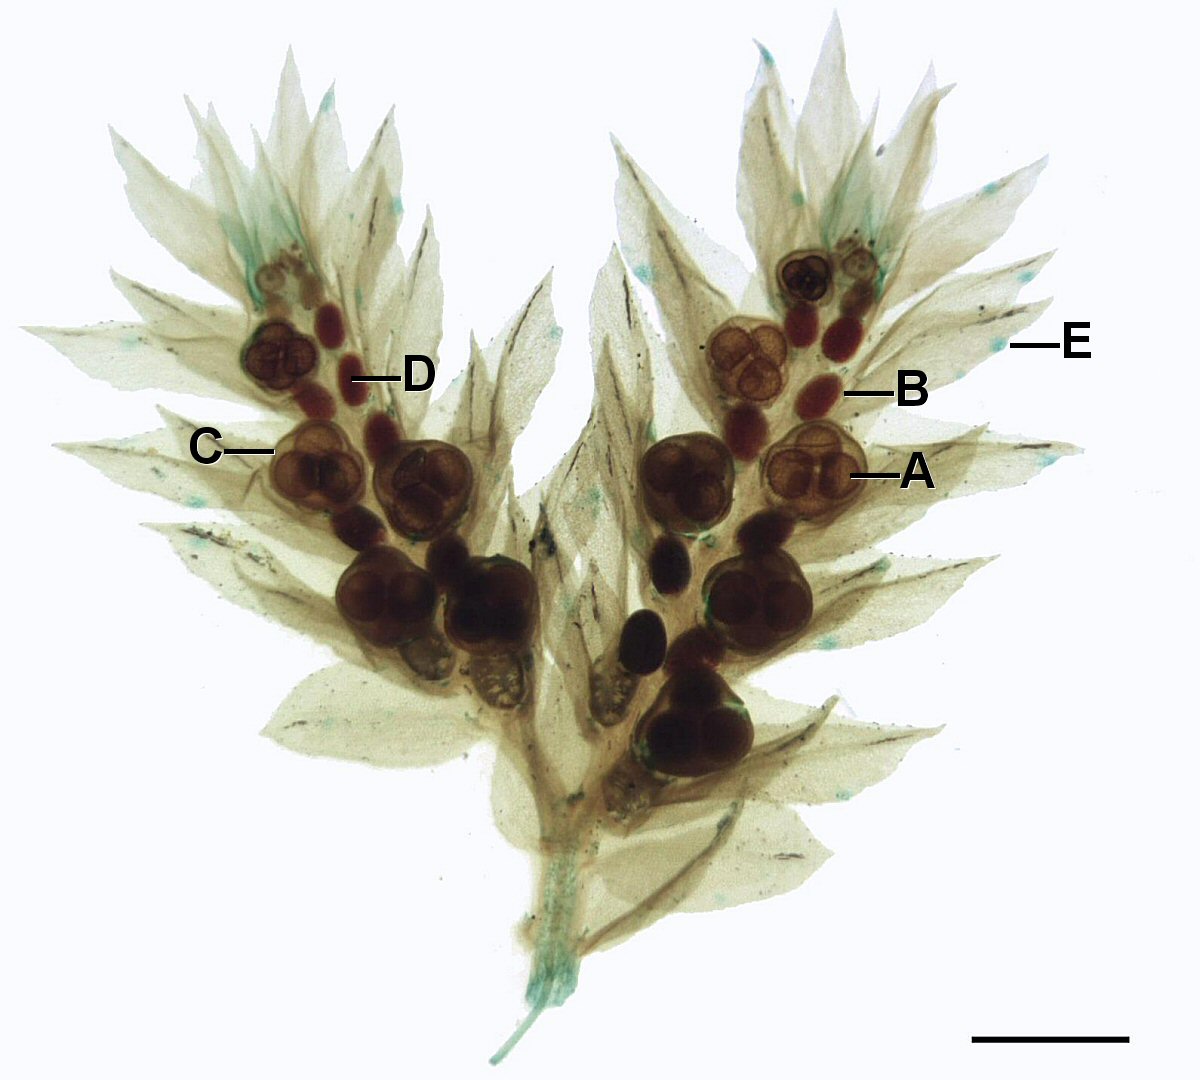 Two Selaginella strobili. Inside the megasporangia, there are 3-4 visible large spores. Microspores are too small to distinguish.